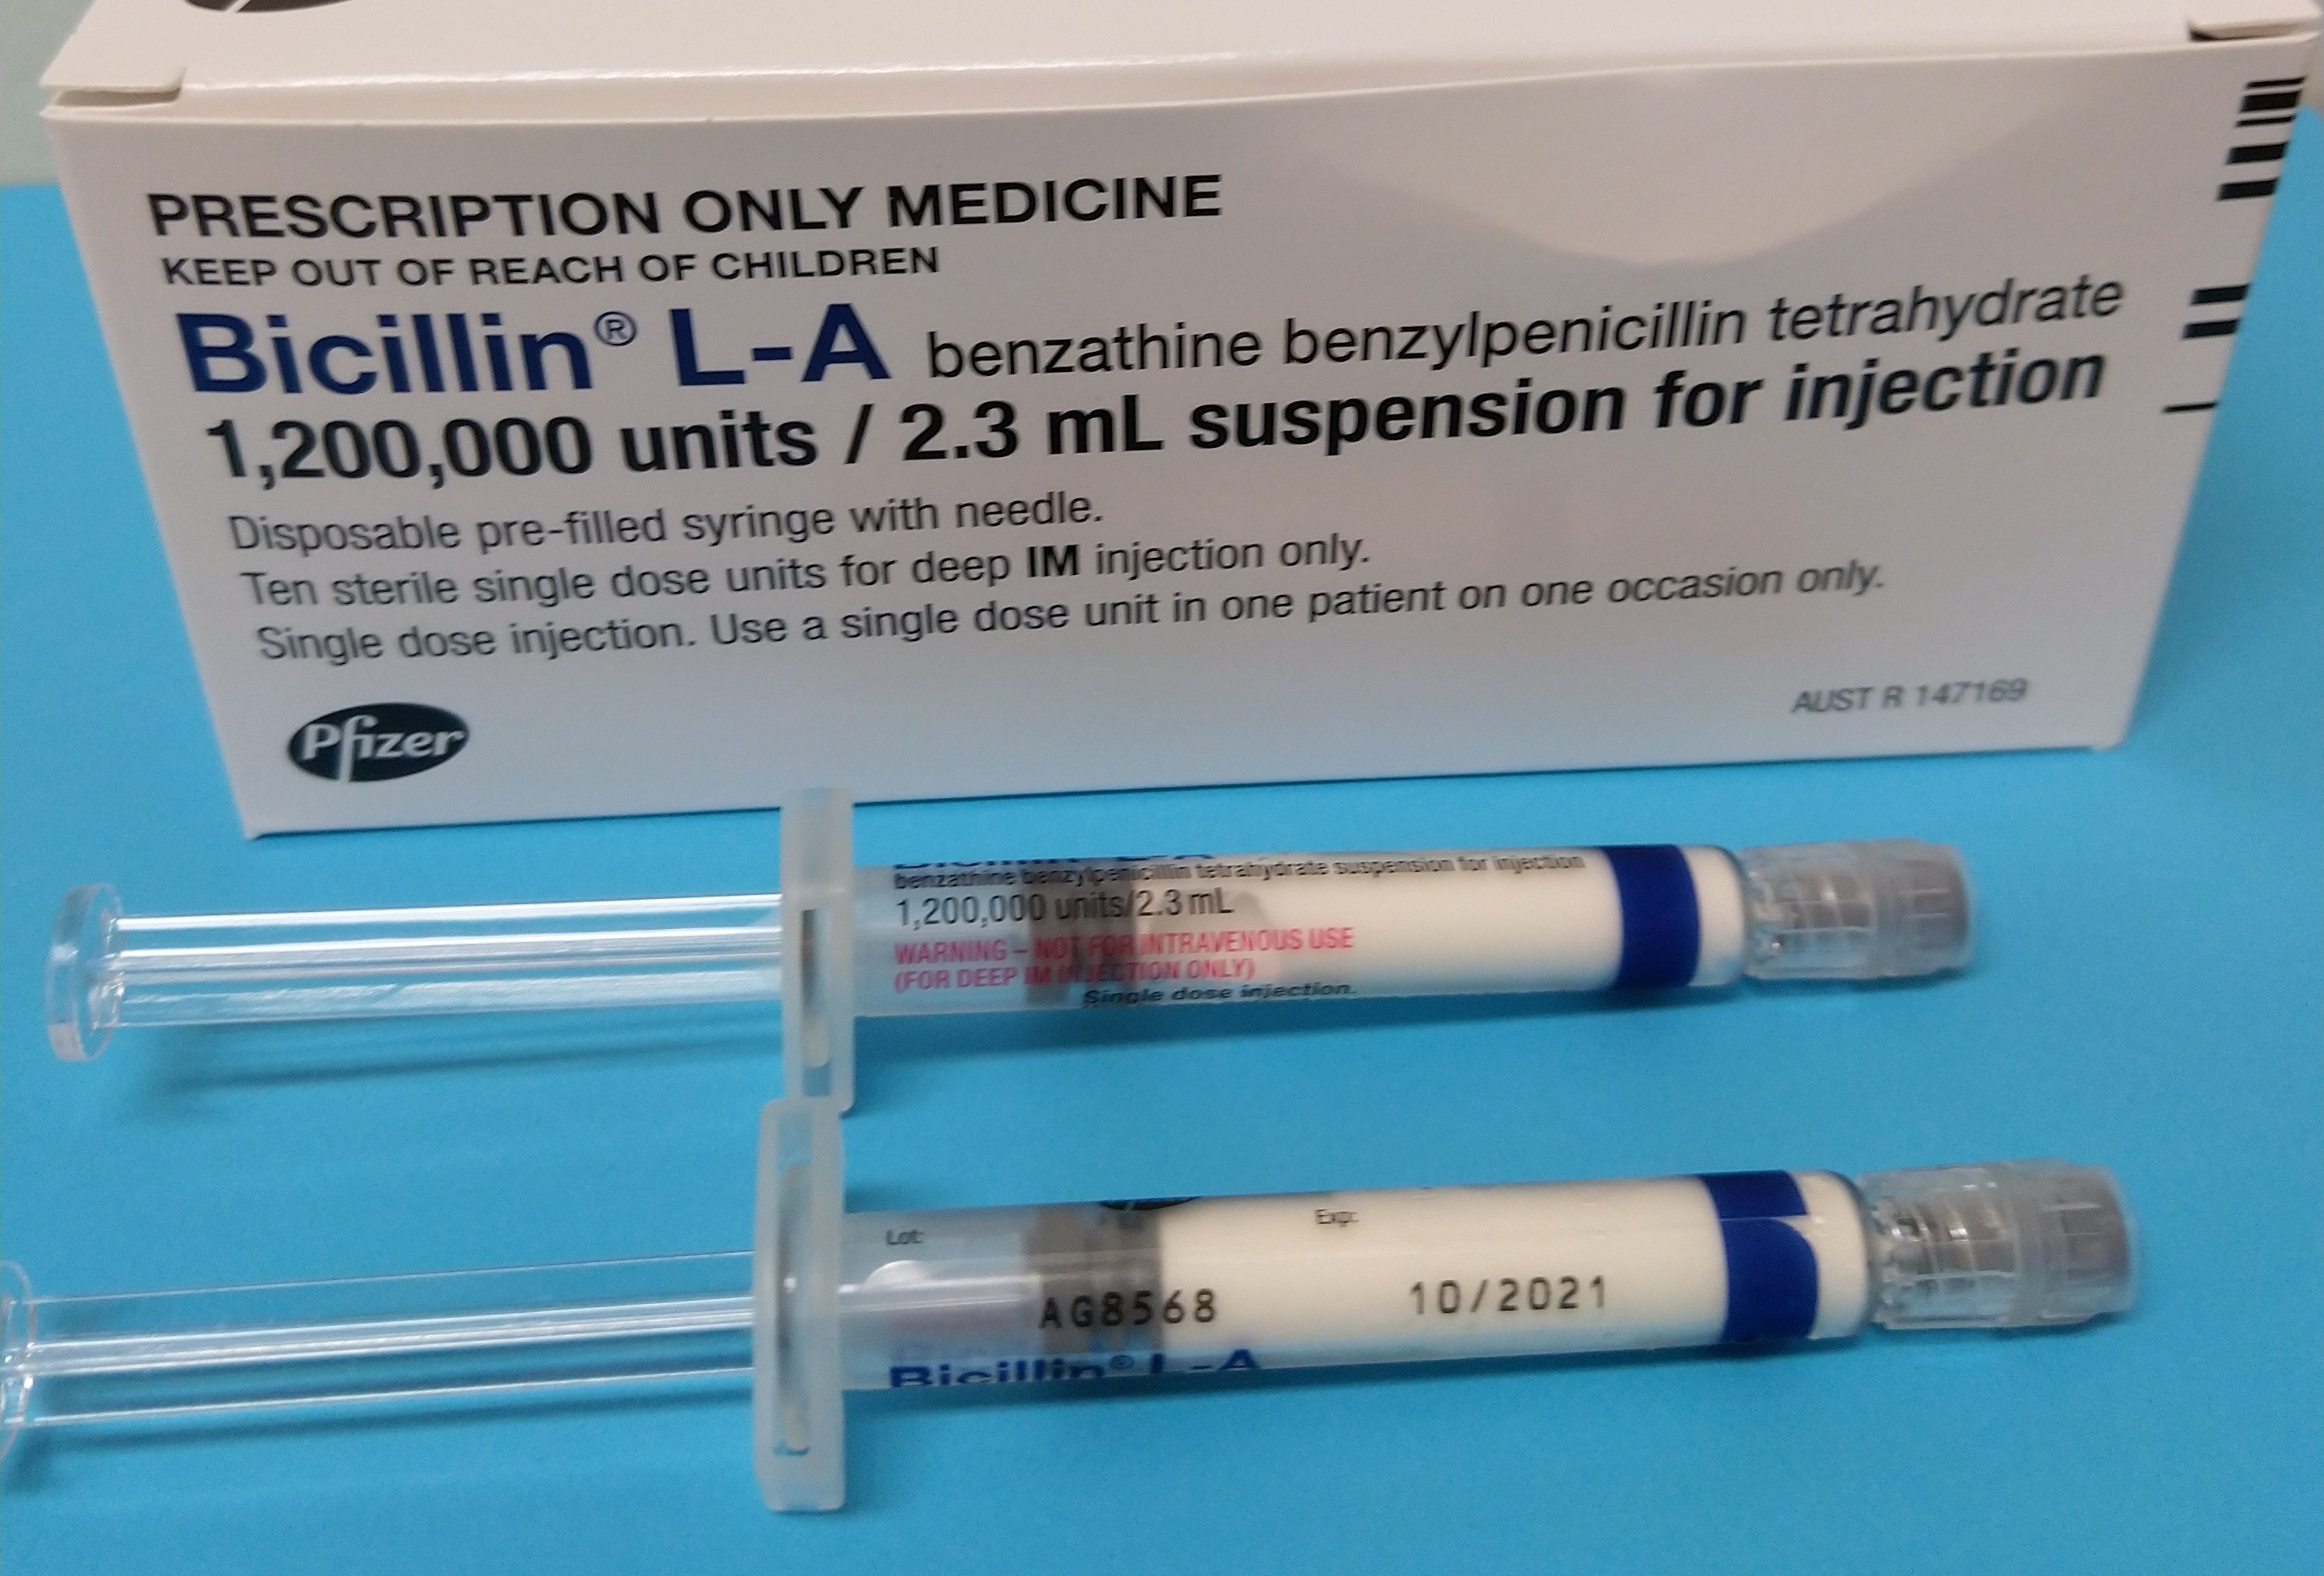 Bicillin box and 2 single dose syringes